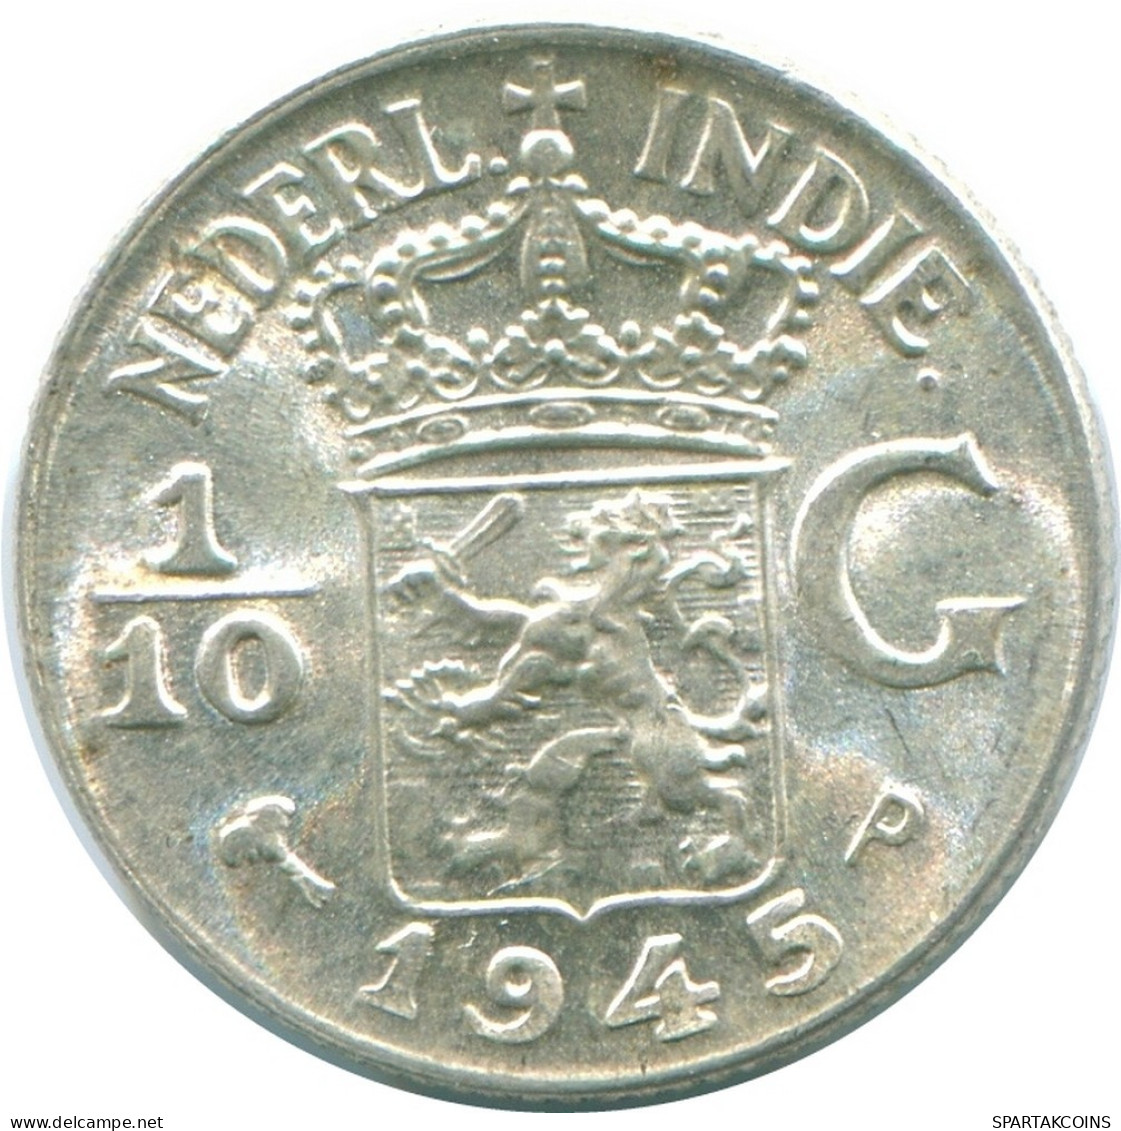 1/10 GULDEN 1945 P NIEDERLANDE OSTINDIEN SILBER Koloniale Münze #NL14010.3.D.A - Dutch East Indies